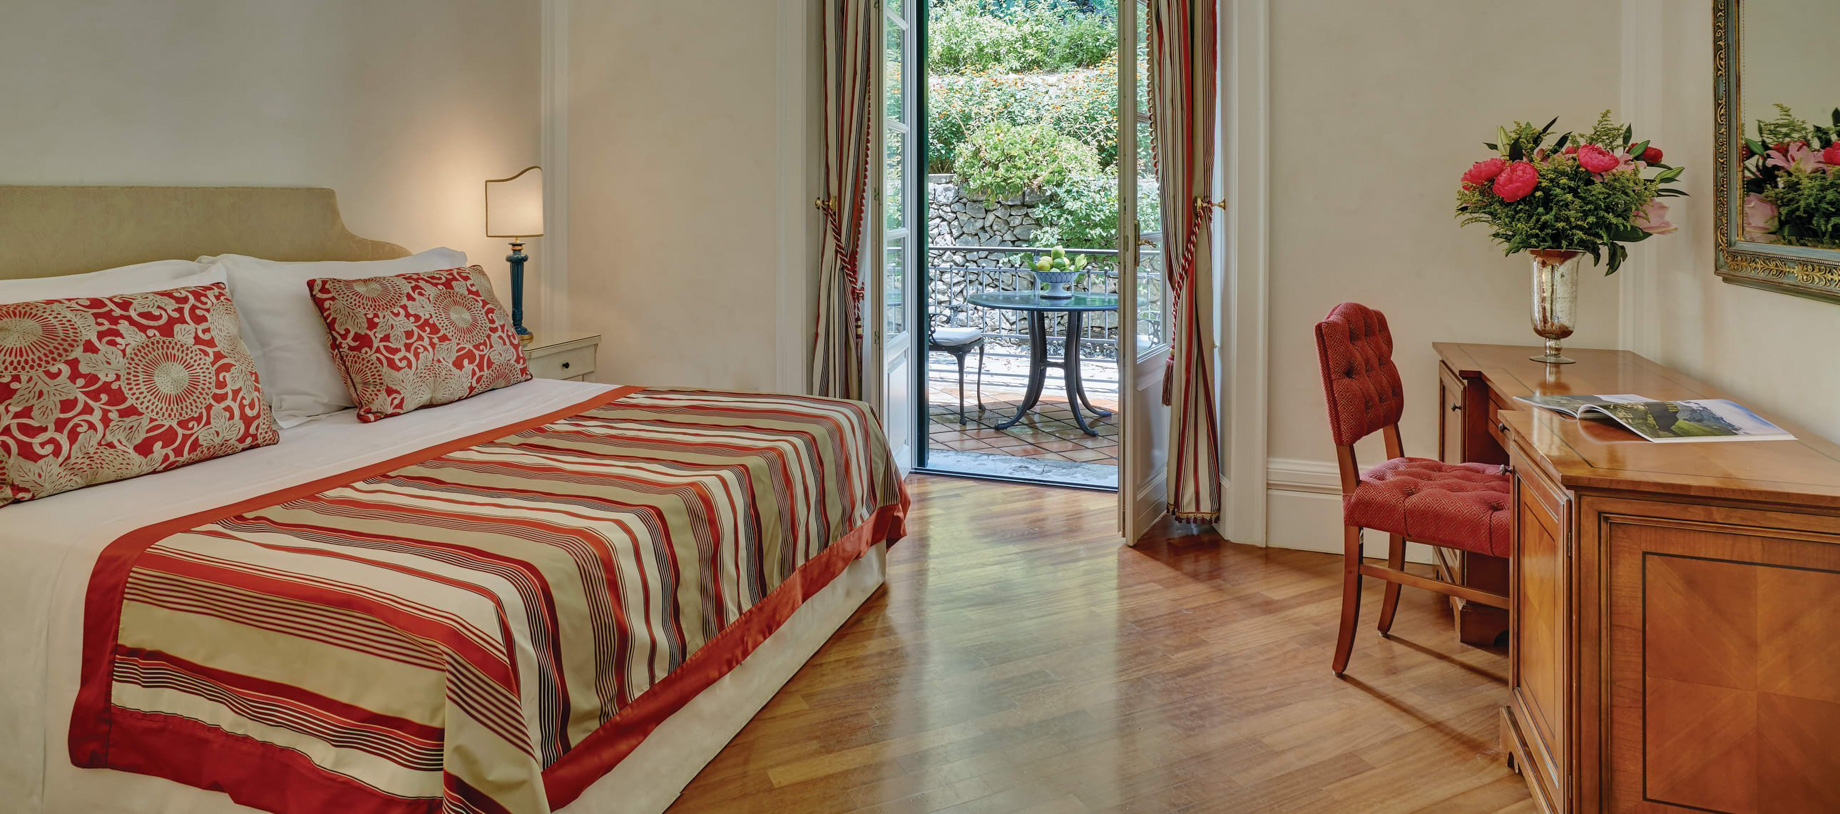 104 – Grand Hotel Timeo, A Belmond Hotel – Taormina, Italy – Villa Gallery